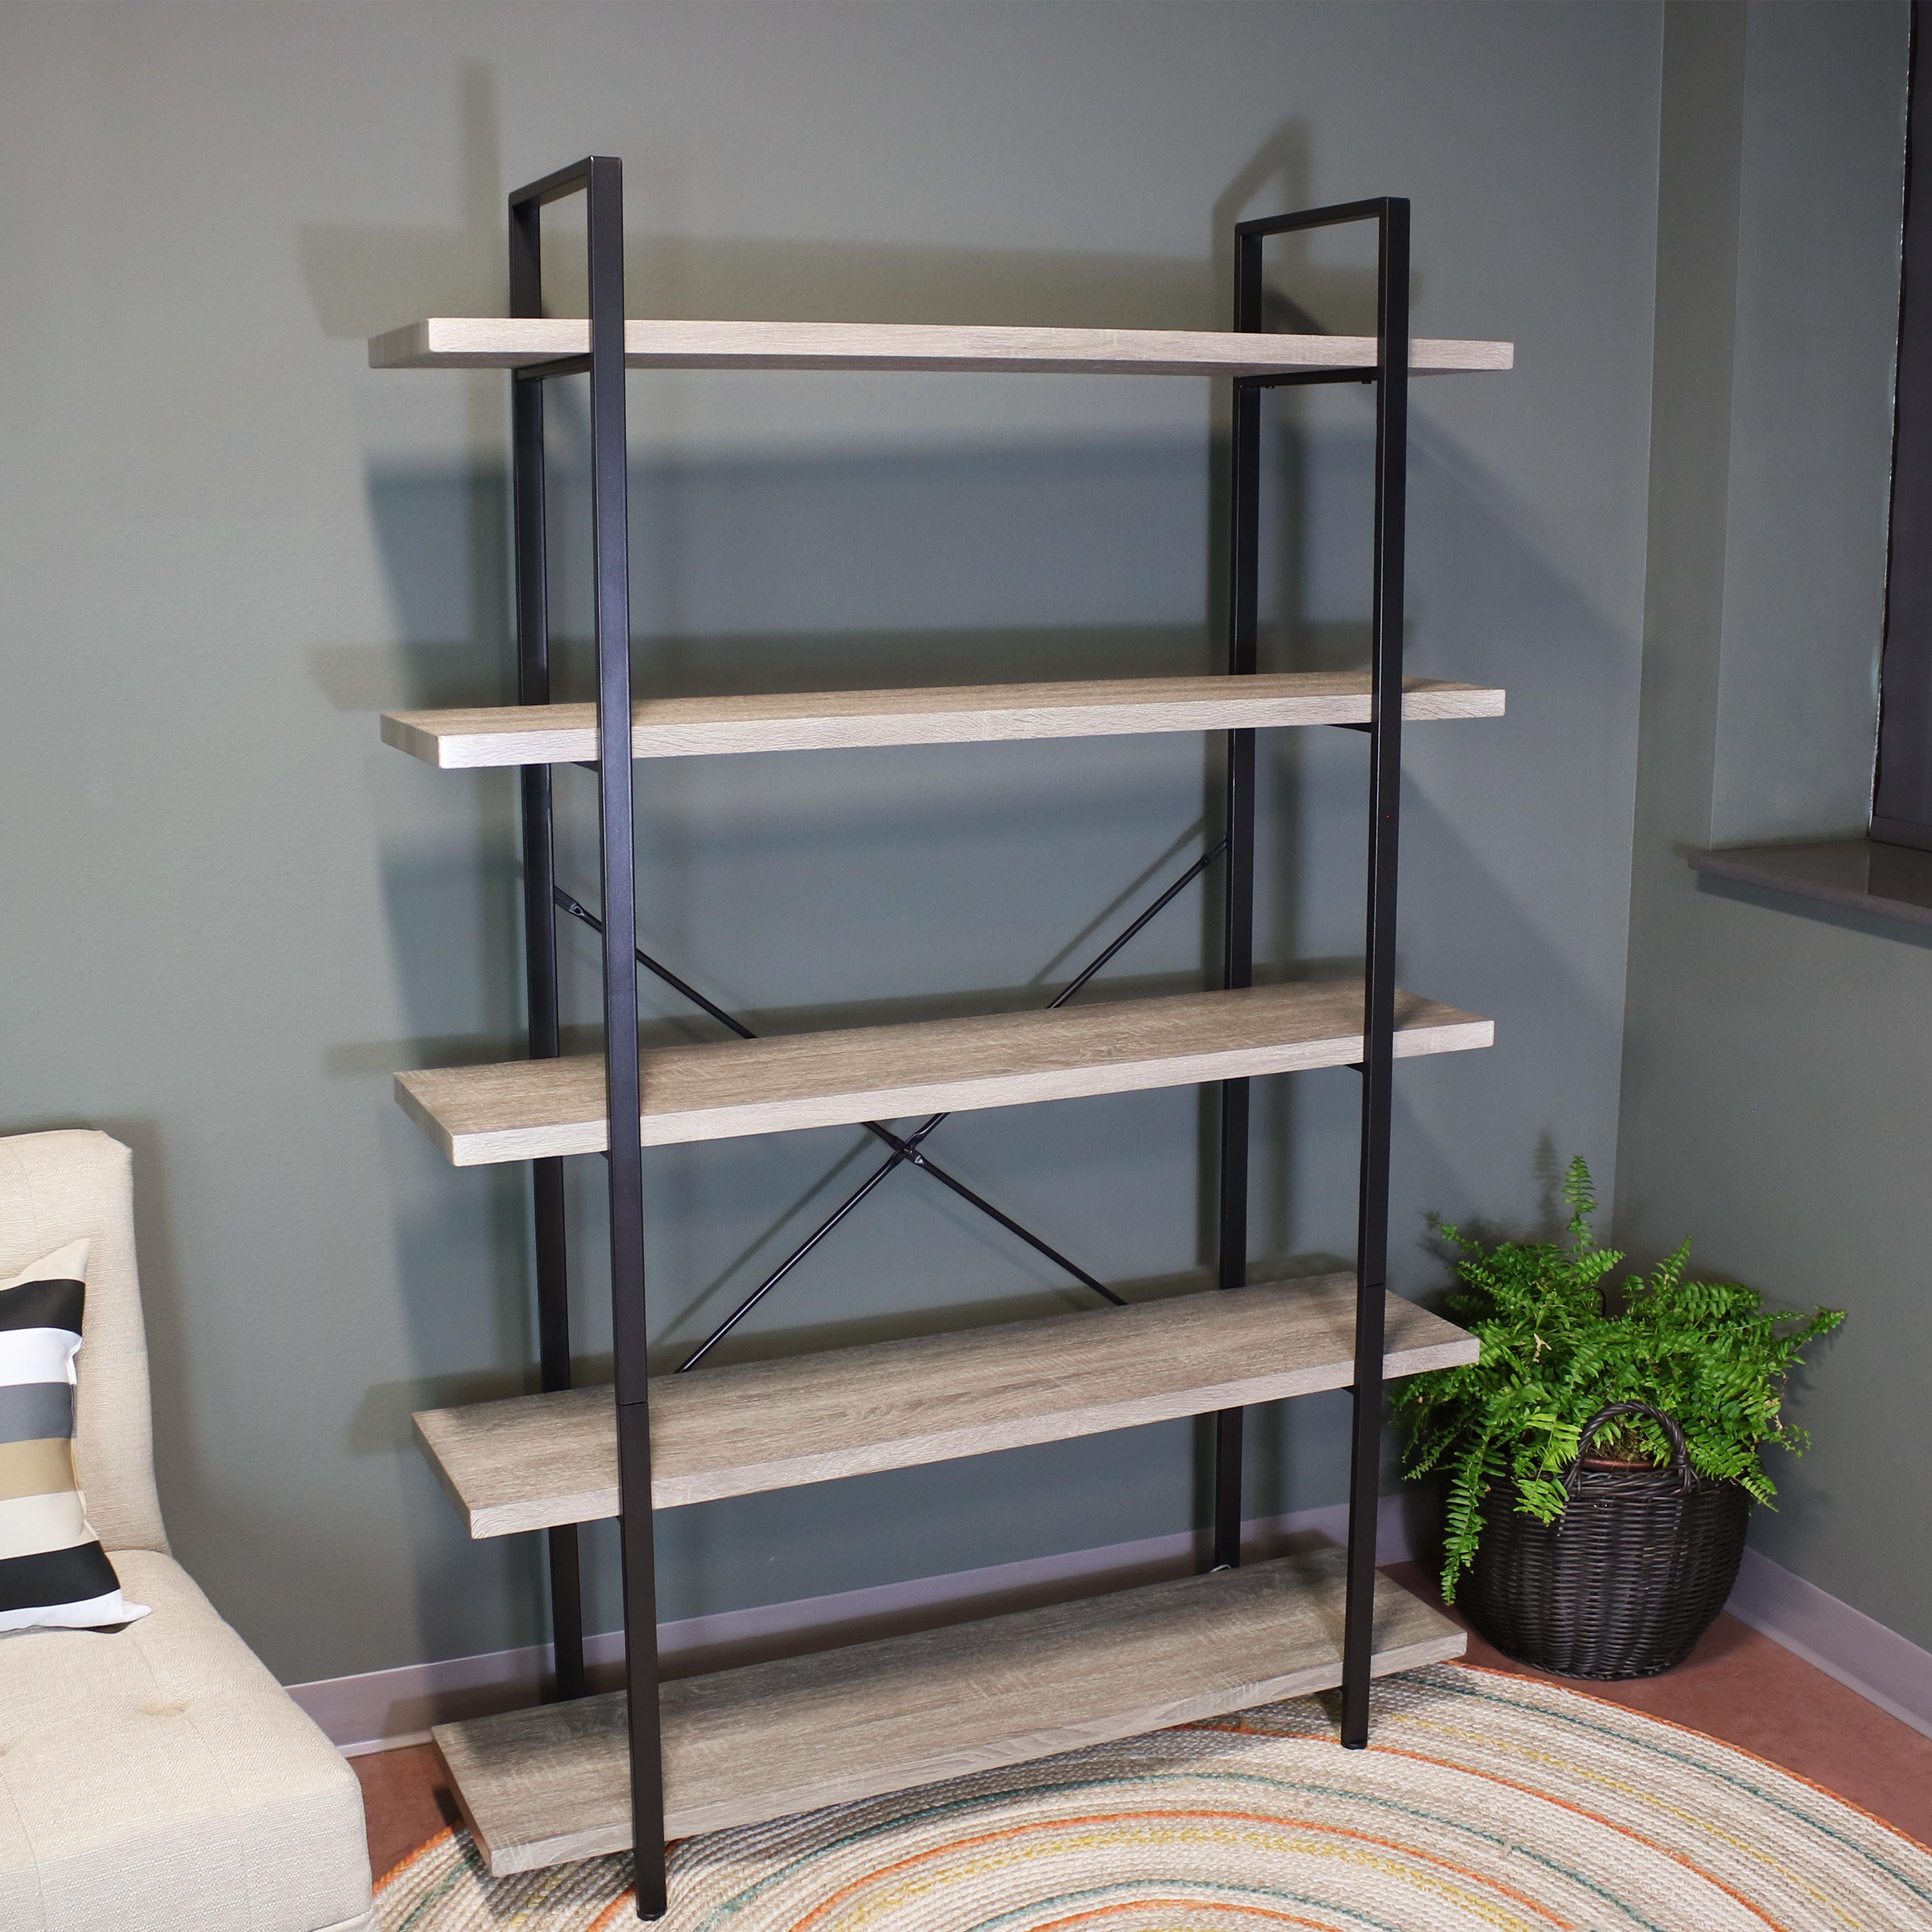 Sunnydaze Industrial Style 5-Tier Bookshelf with Wood Veneer Shelves - Oak Gray